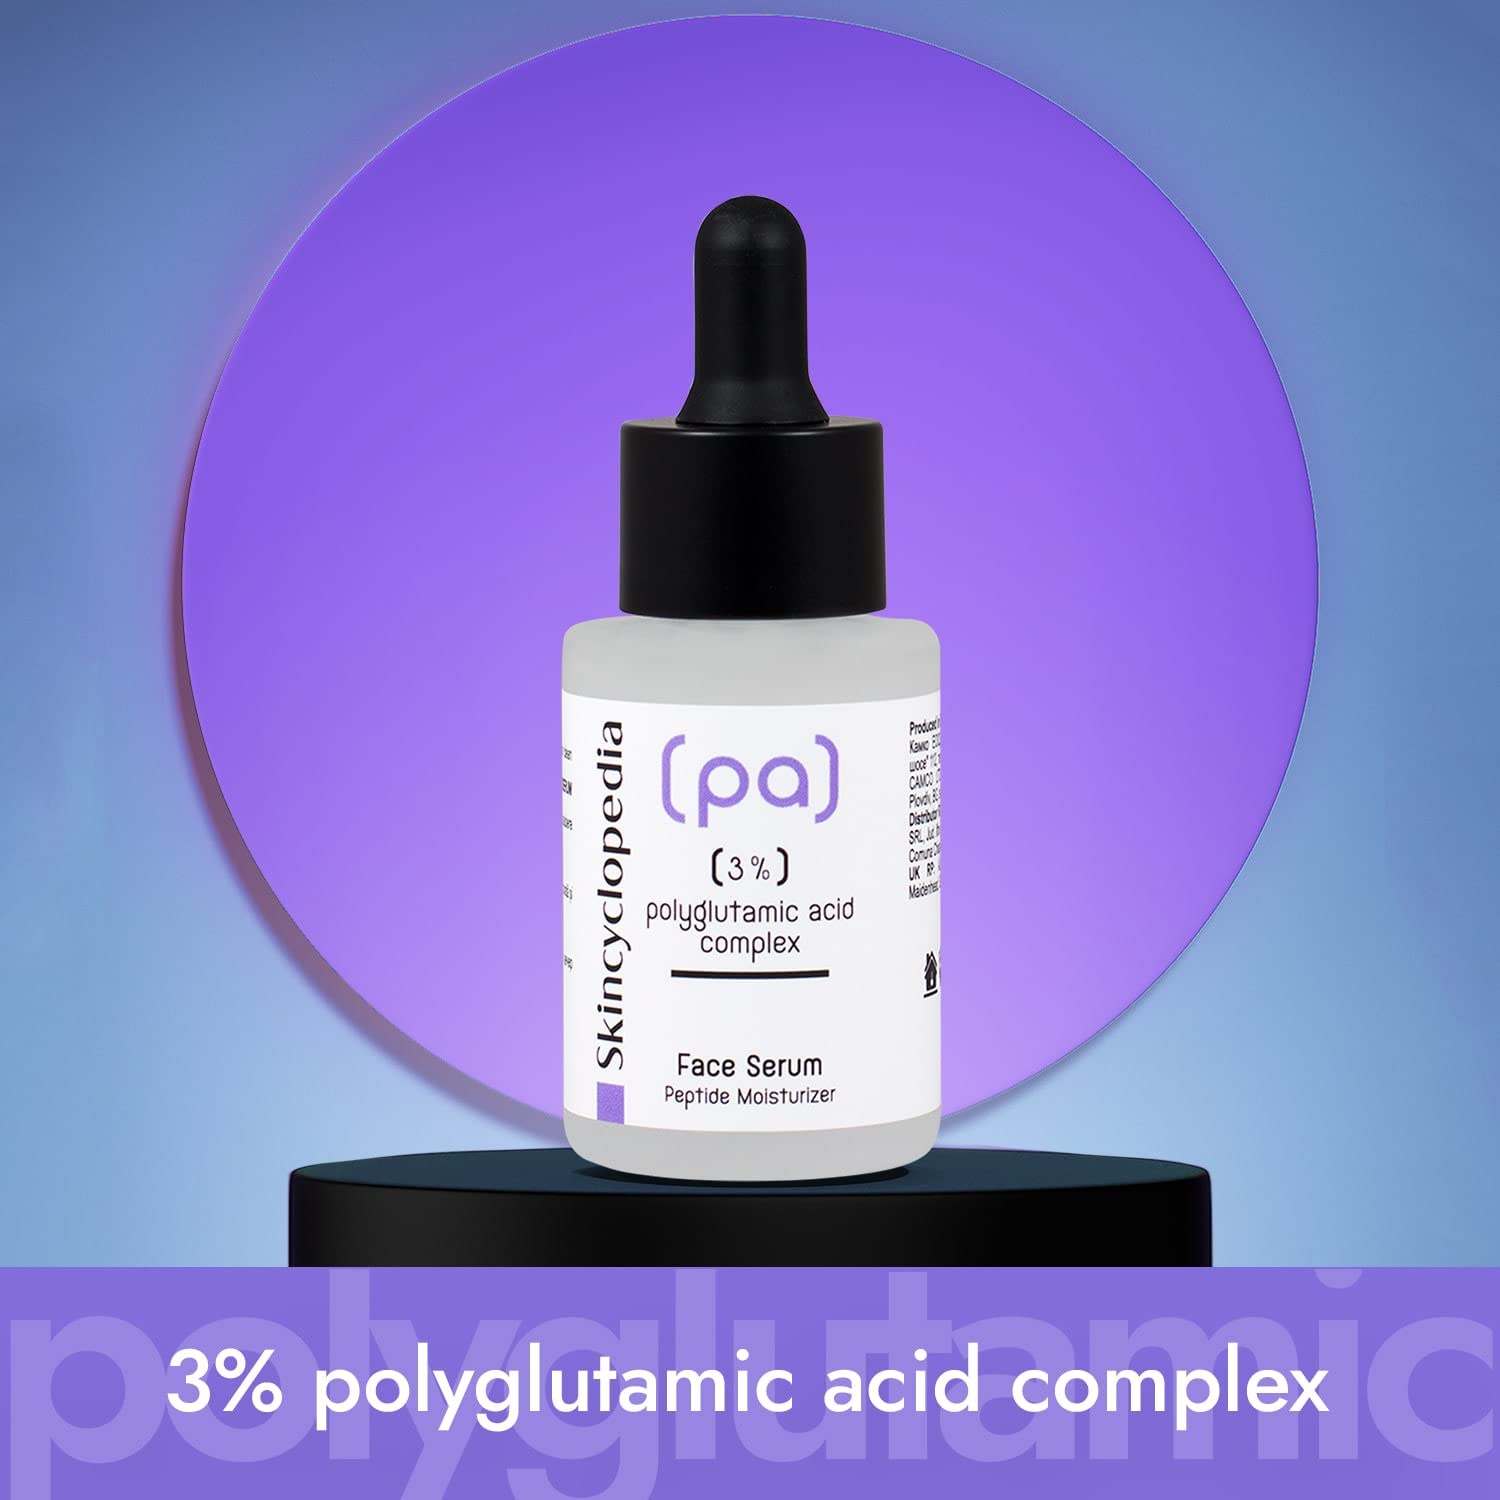 SKINCYCLOPEDIA Face Serum 3% Polyglutamic Acid Complex